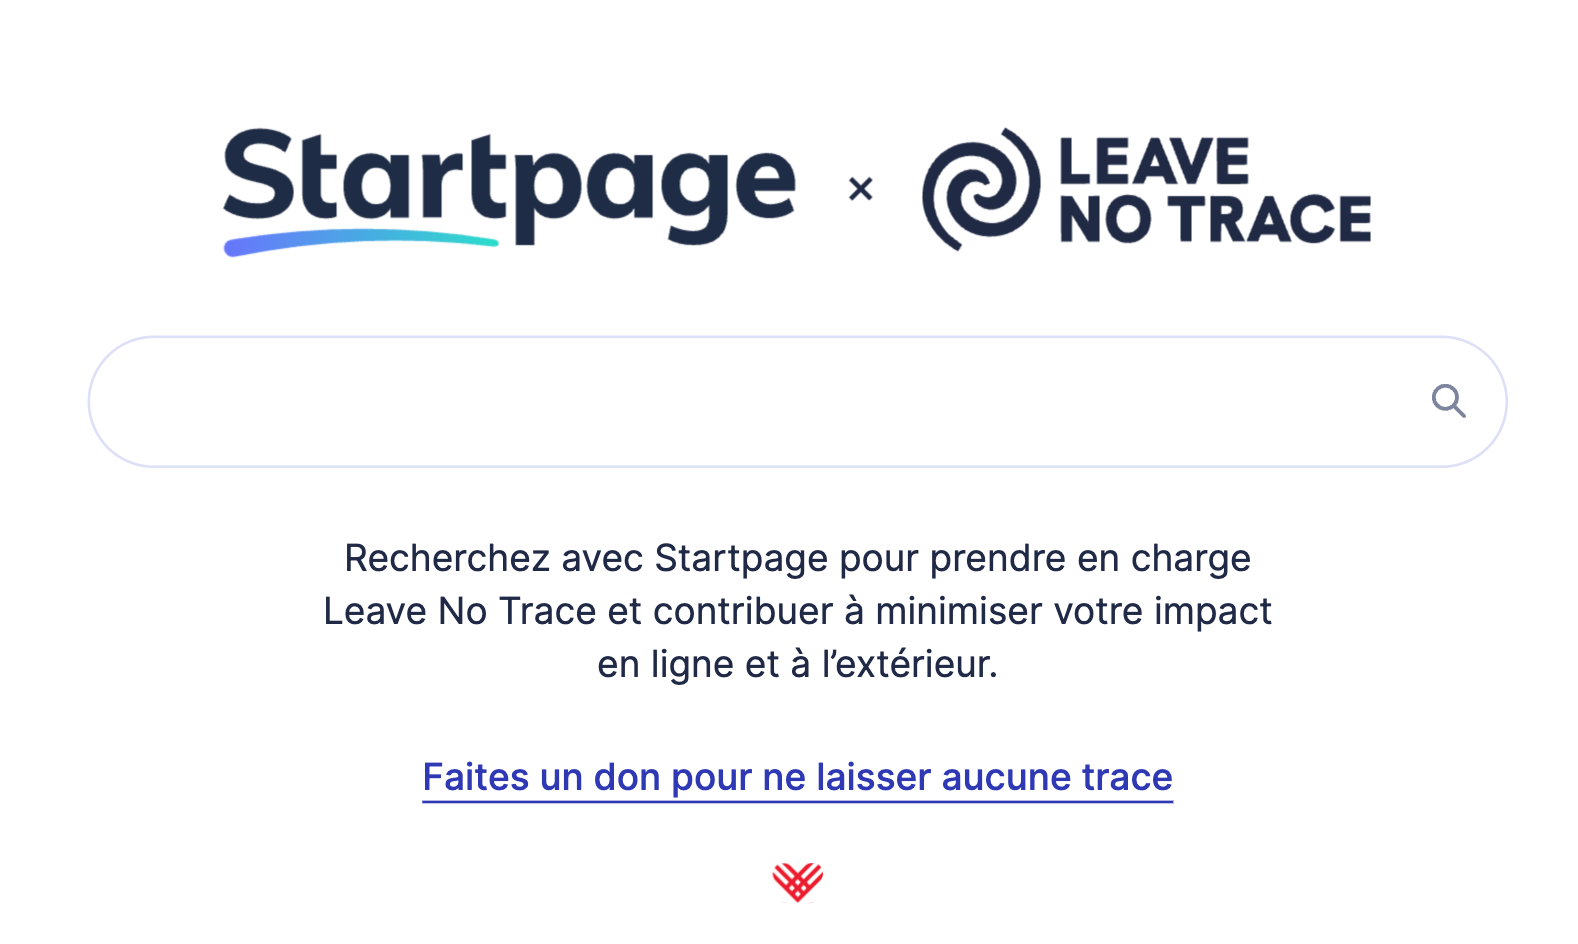 Startpage et Leave No Trace